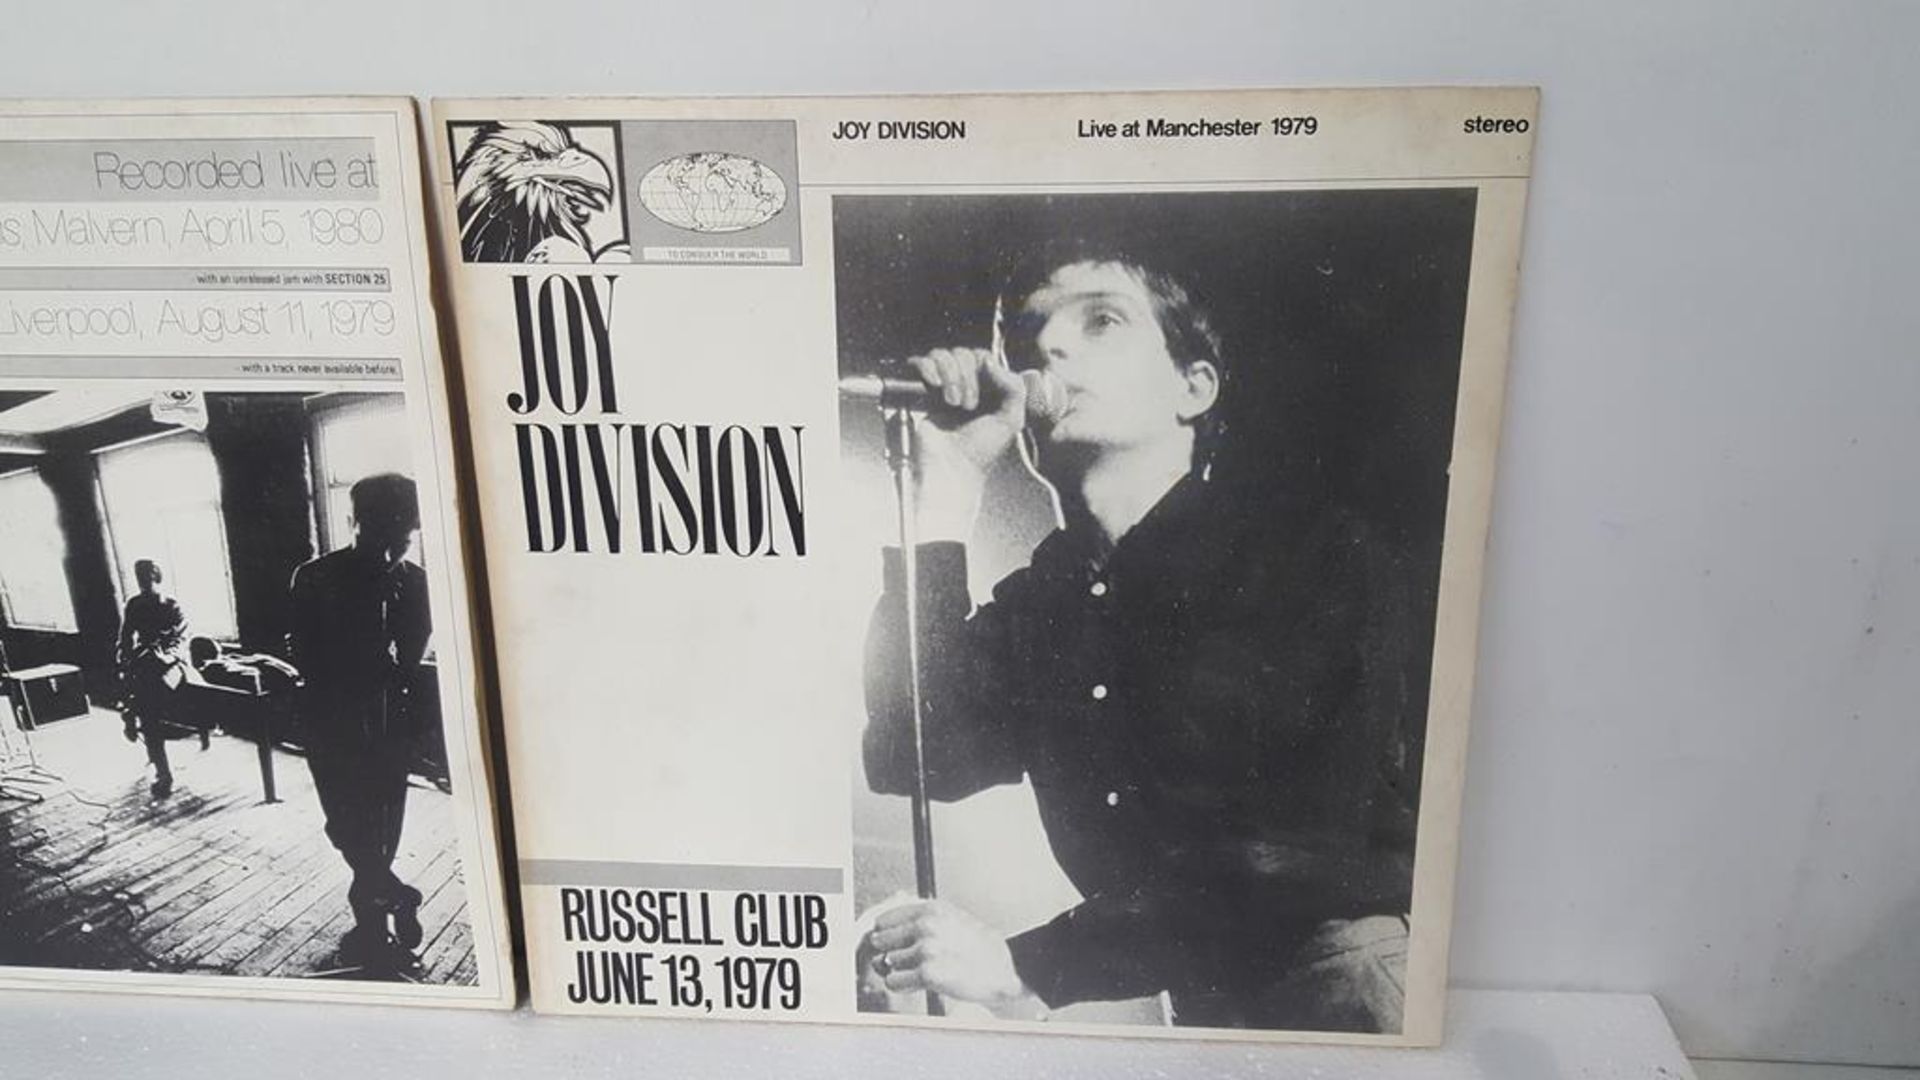 Joy Division 'Live at Manchester 1979' LP with Joy Division 'Winter Gardens, Malven 1980' LP. - Image 2 of 9